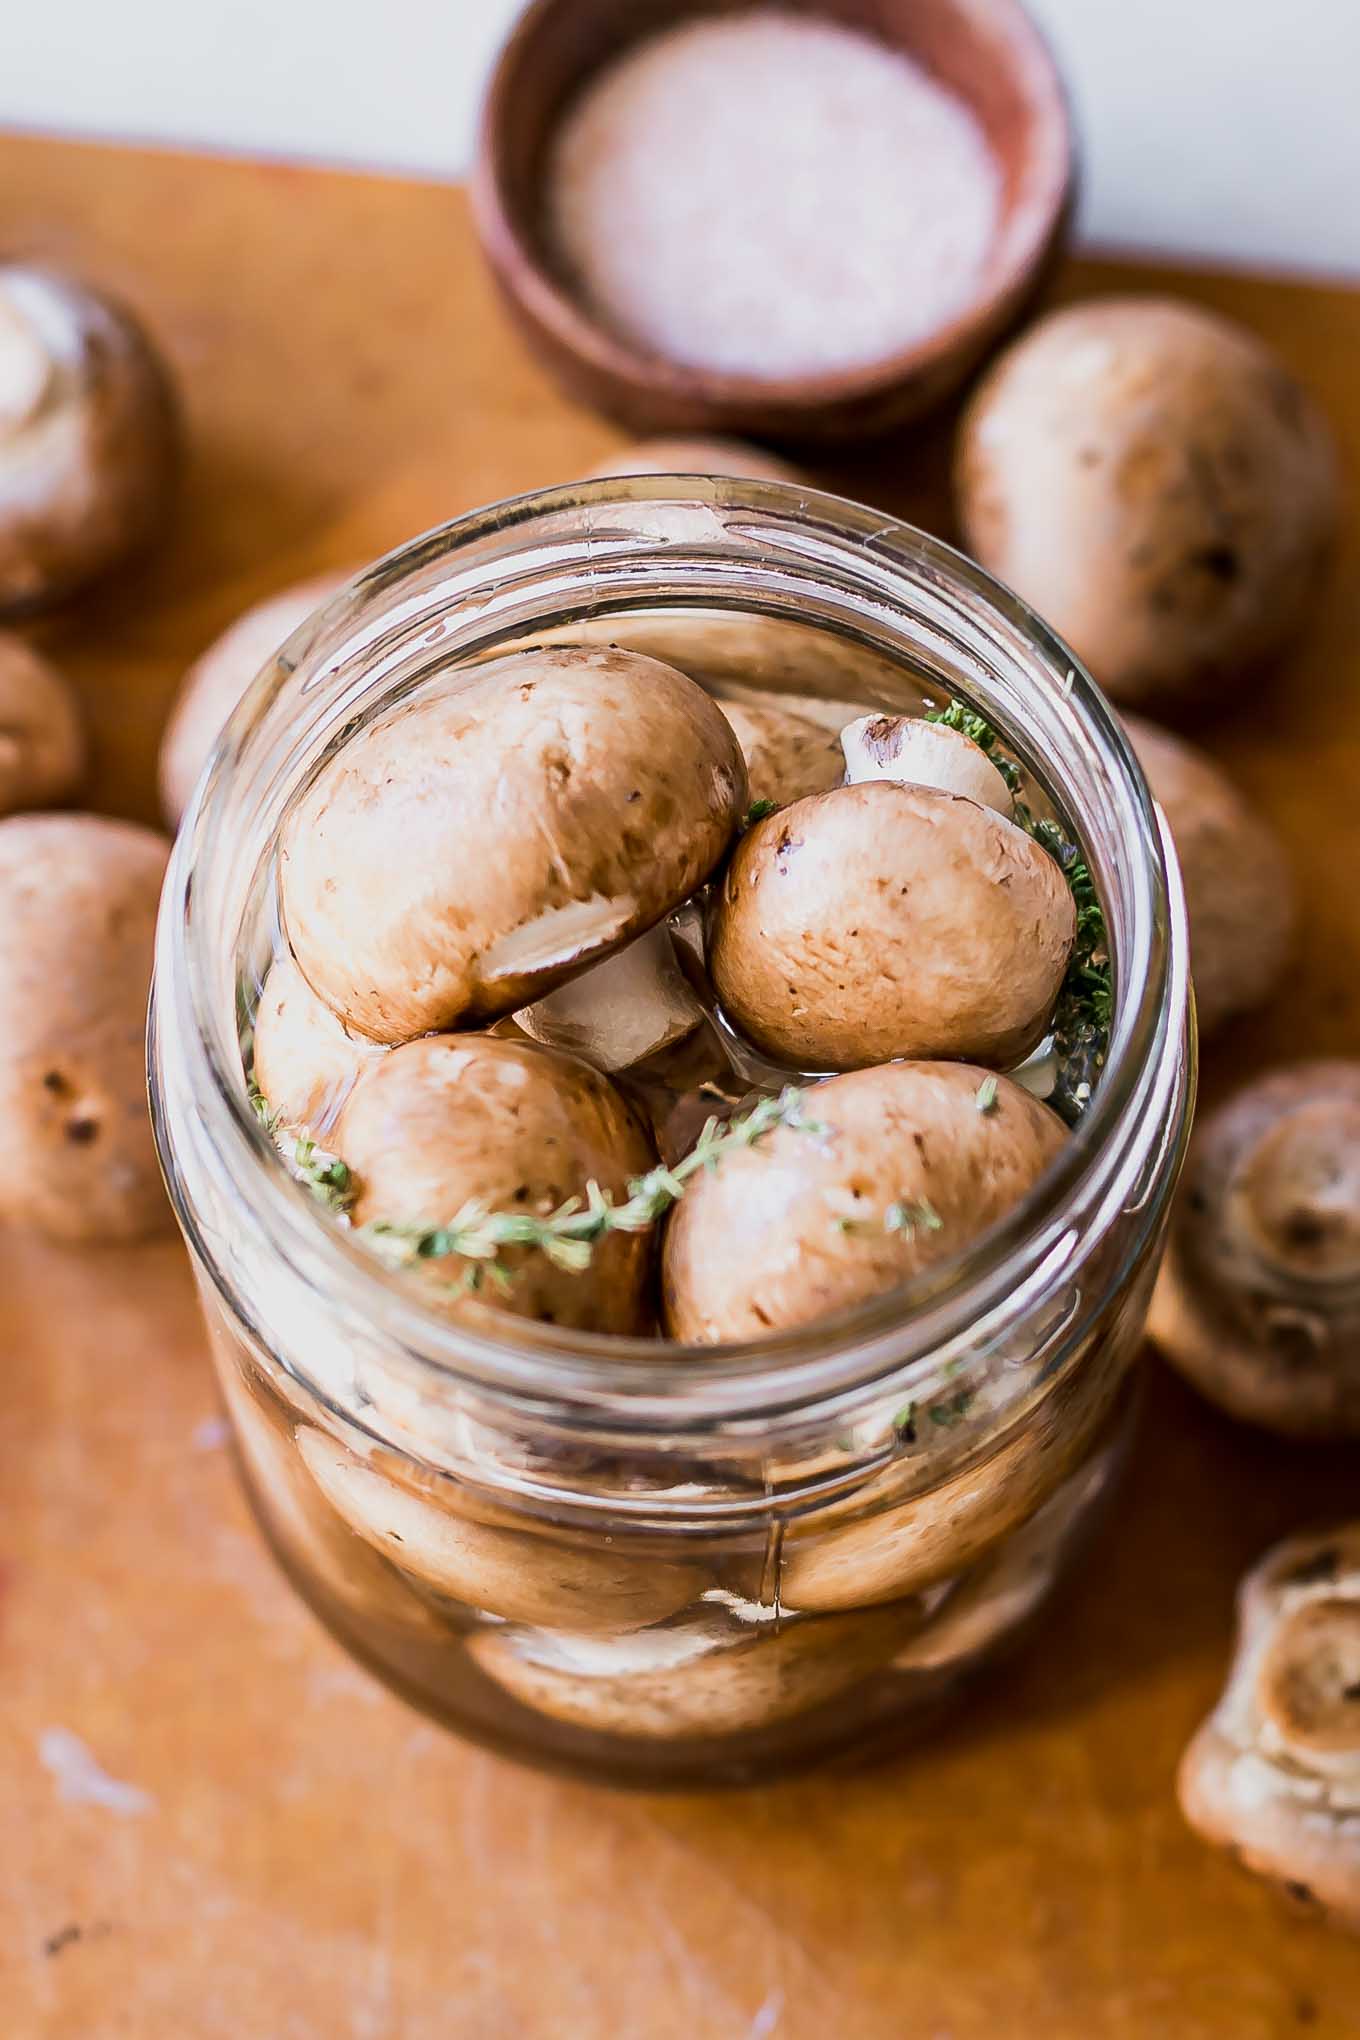 pickled mushrooms in a jar with a vinegar brine